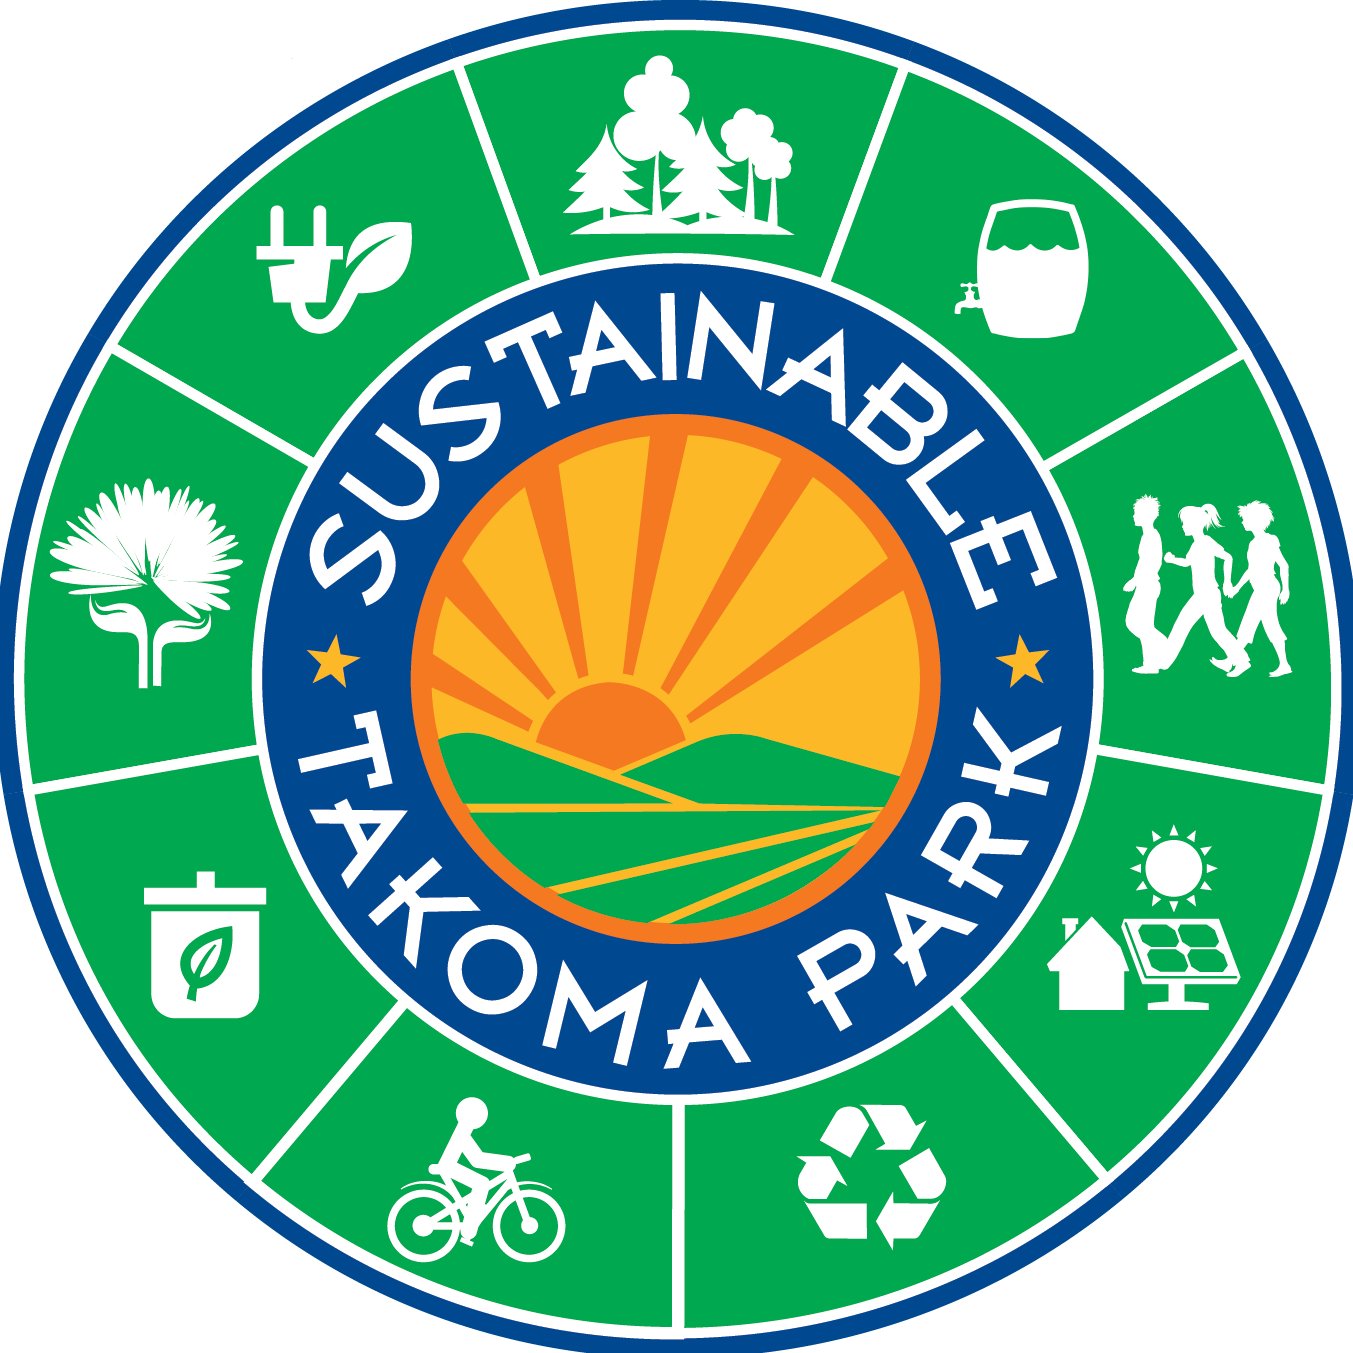 Updates on Takoma Park's sustainability initiatives and programs.